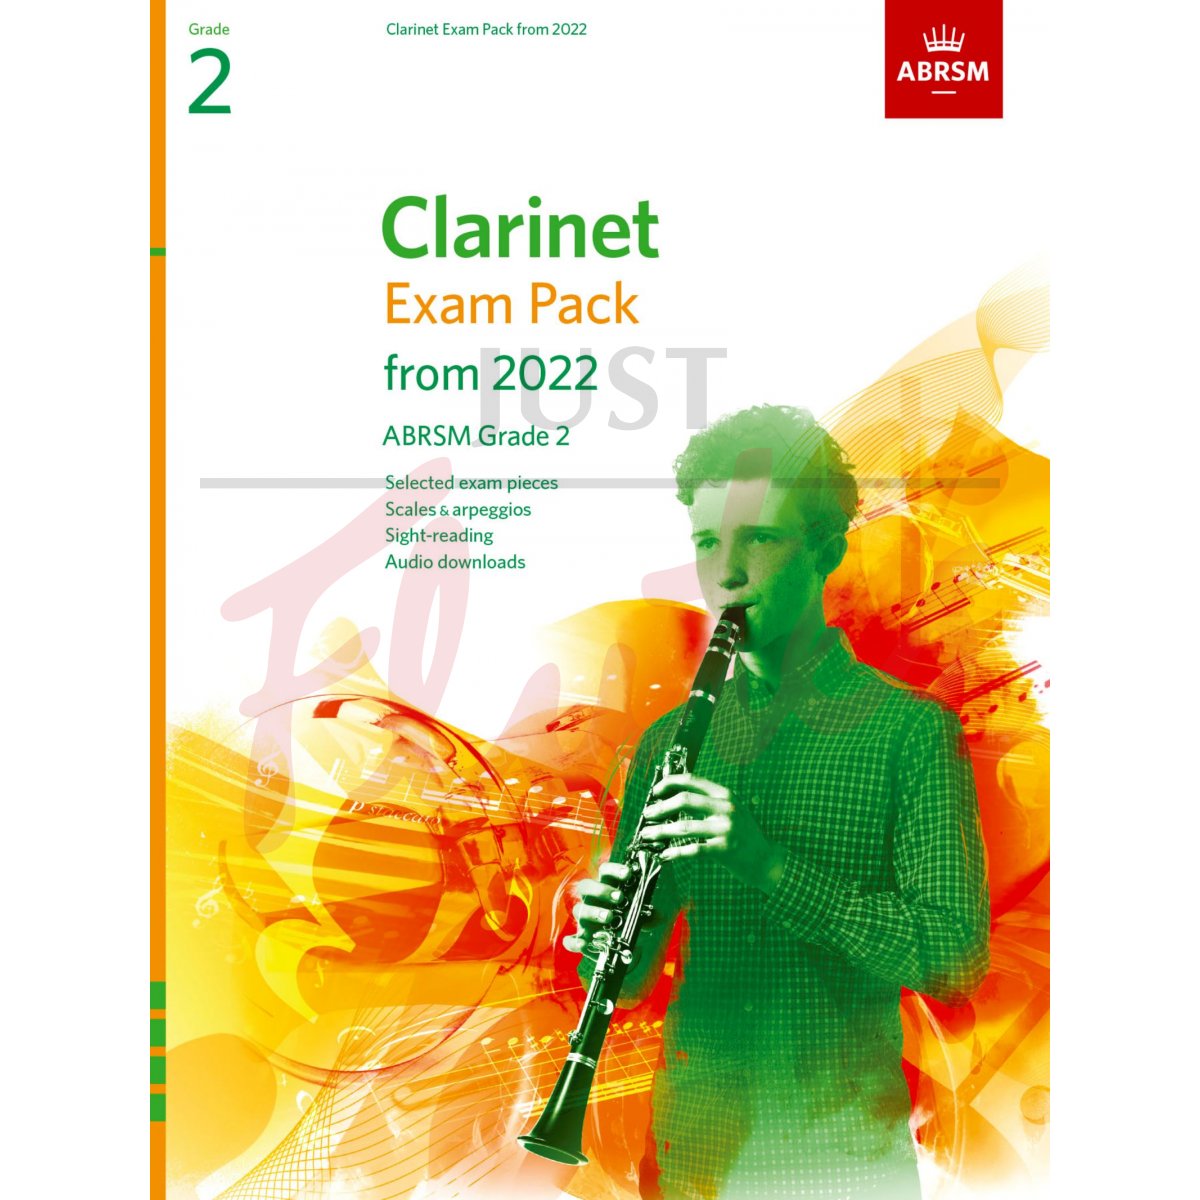 Clarinet Exam Pack from 2022 Grade 2